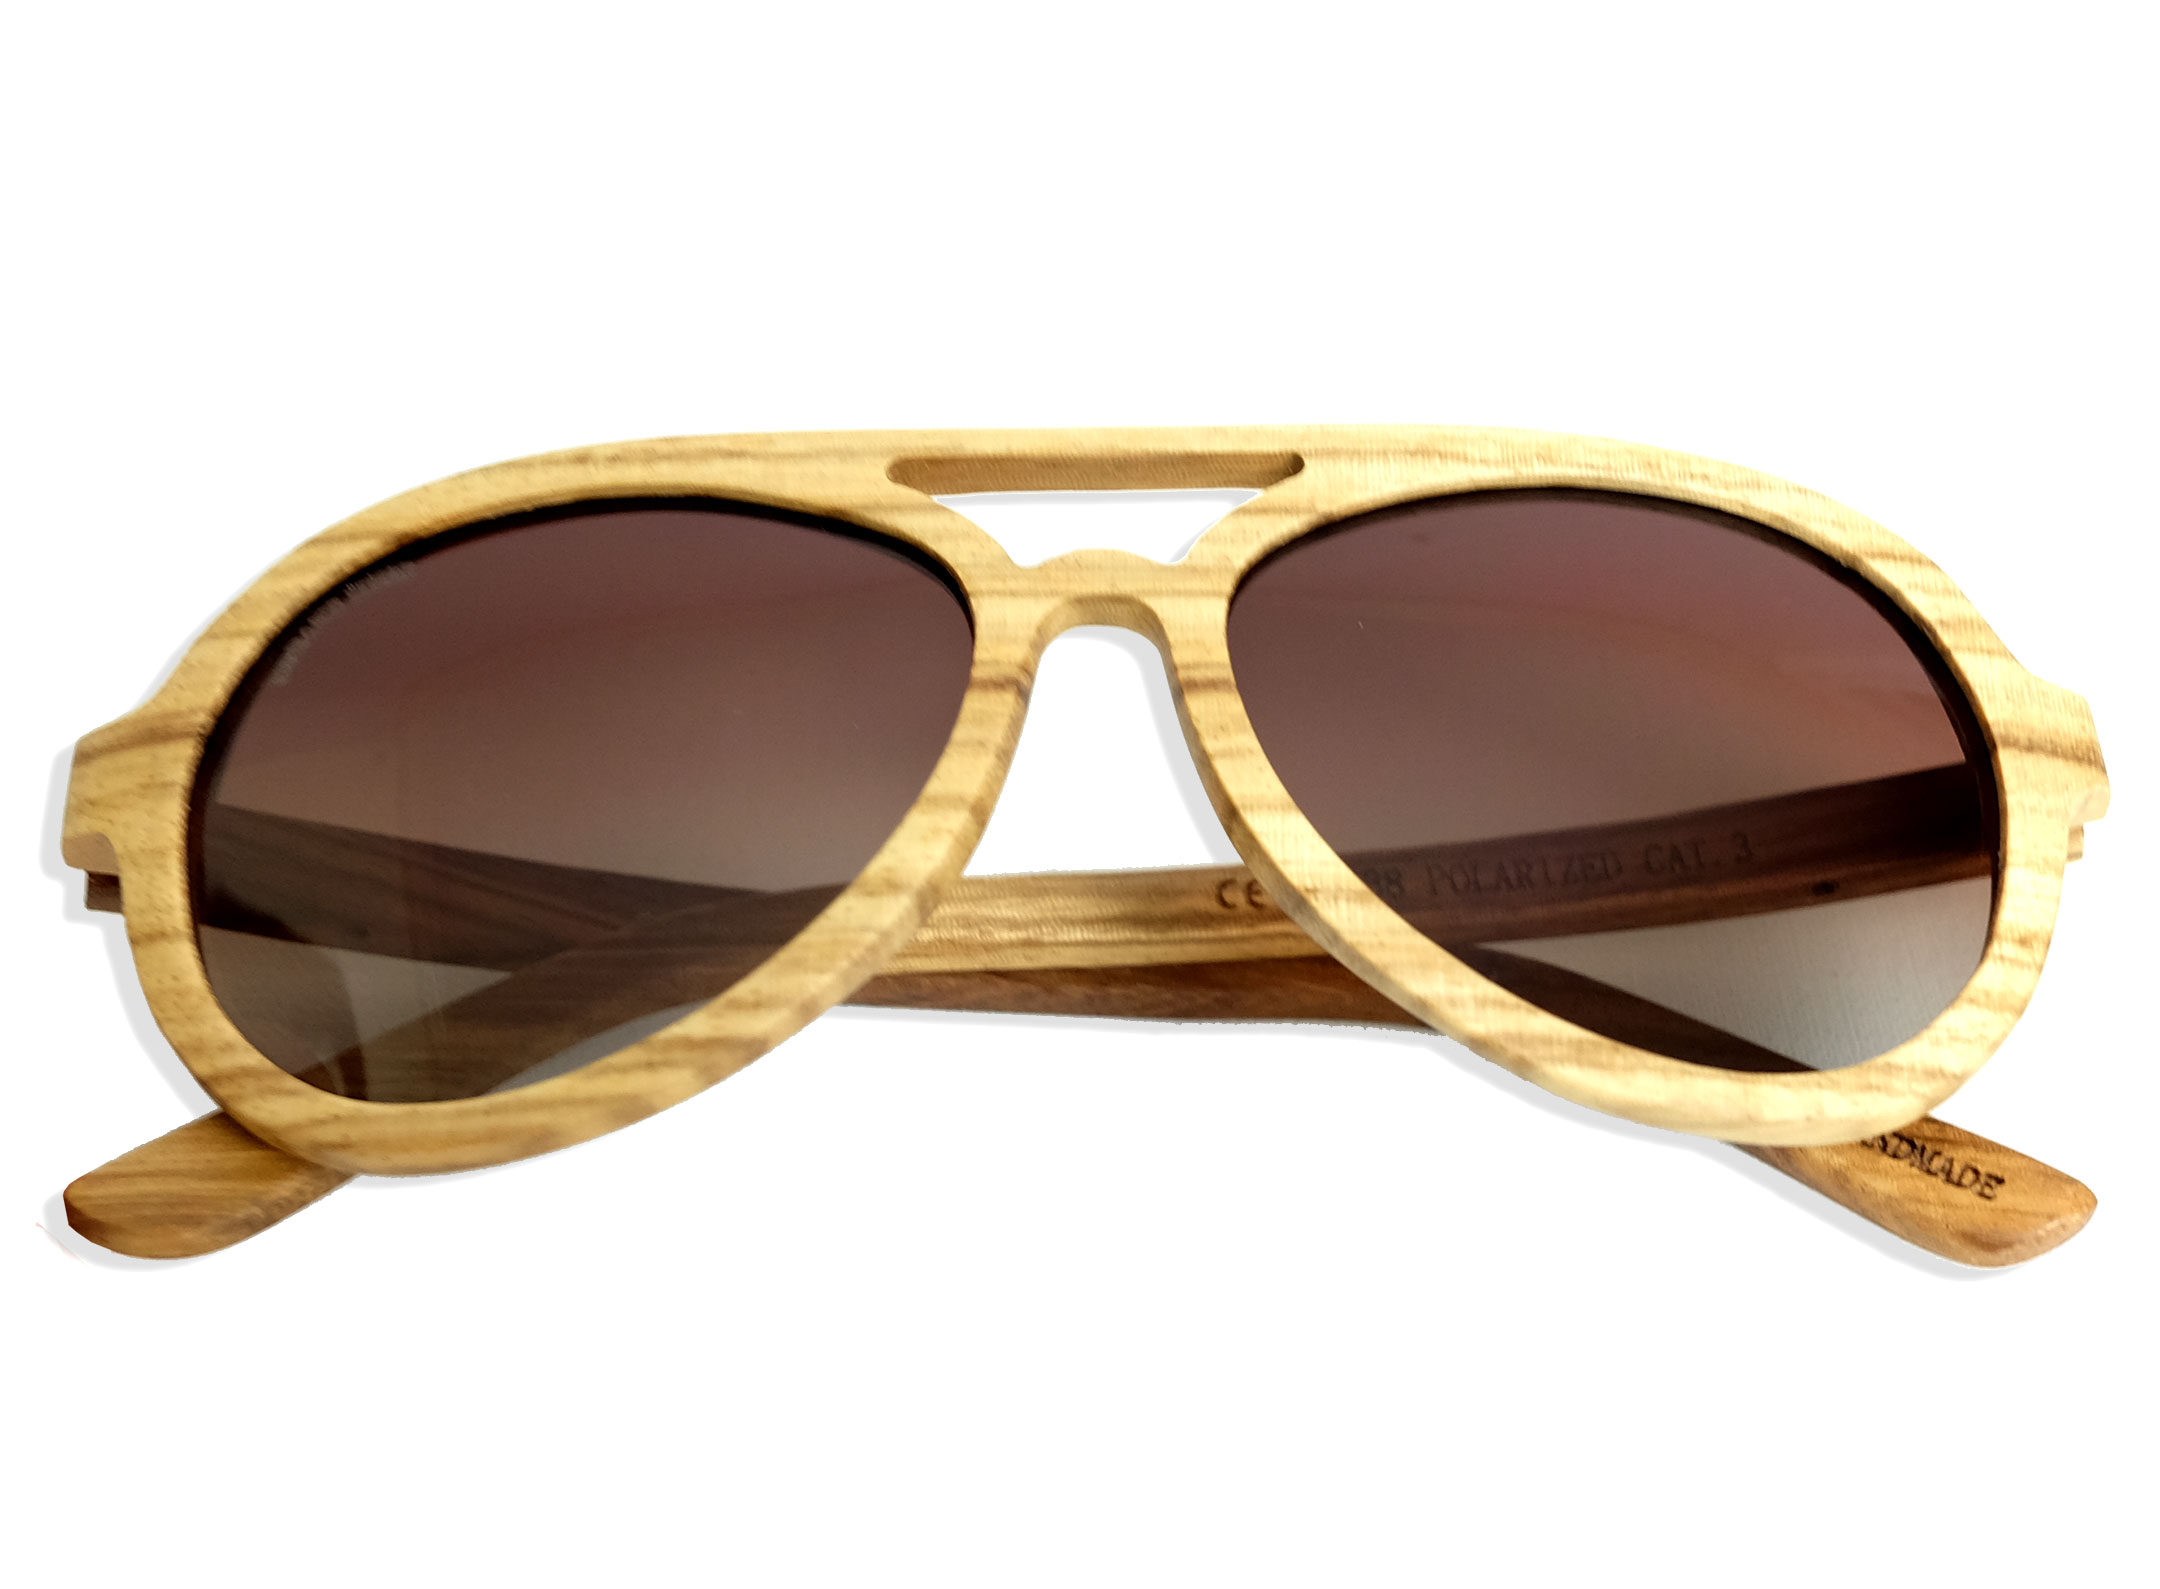 Wood Sunglasses PNG Images & PSDs for Download | PixelSquid - S11923594B